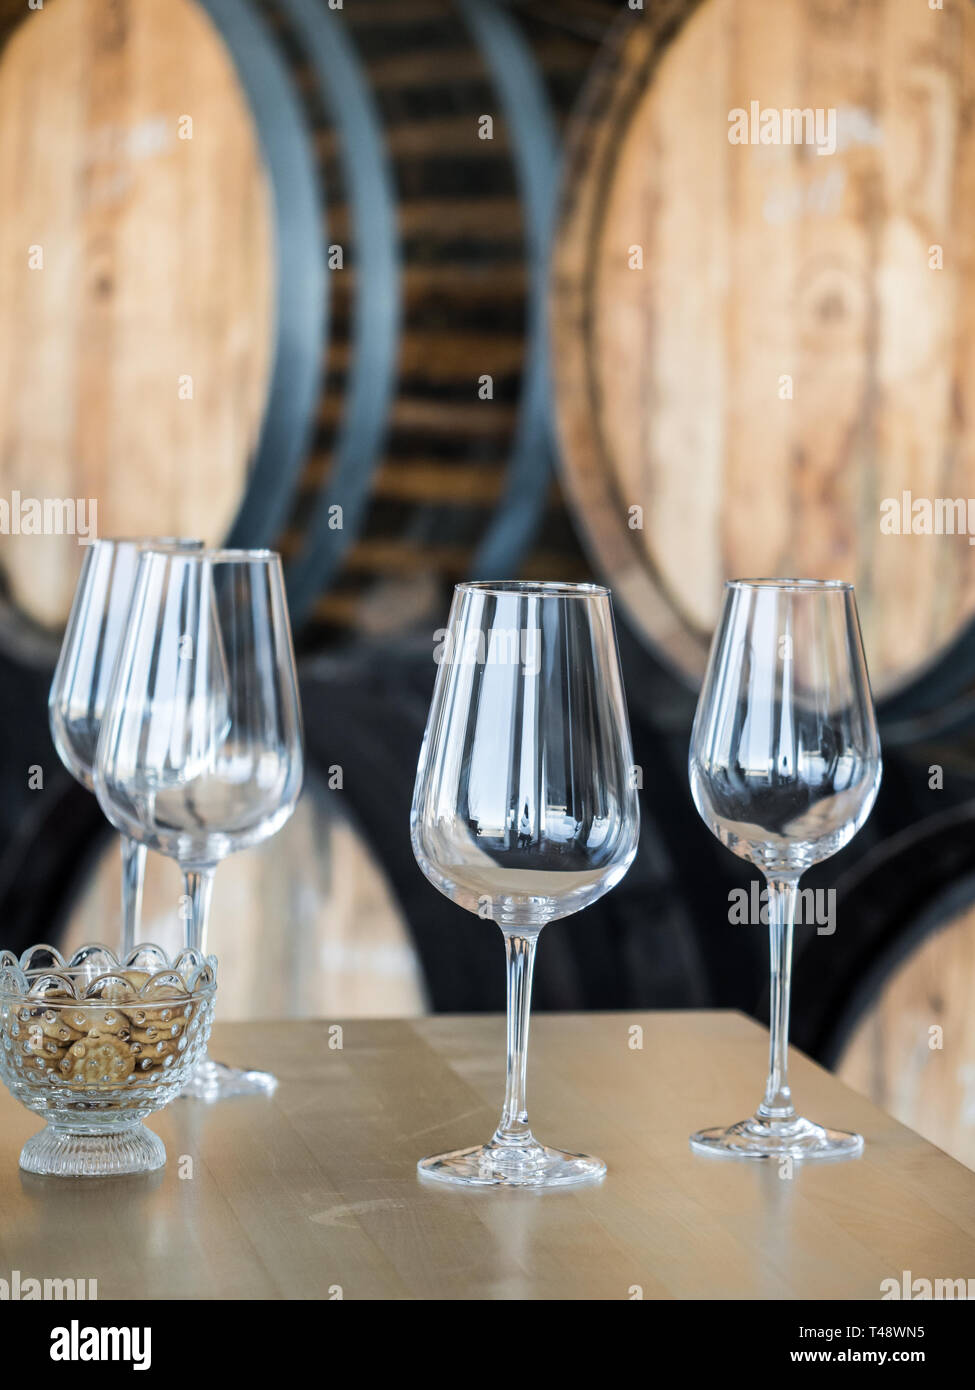 Empty wine glasses in front of wooden wine barrels. Stock Photo